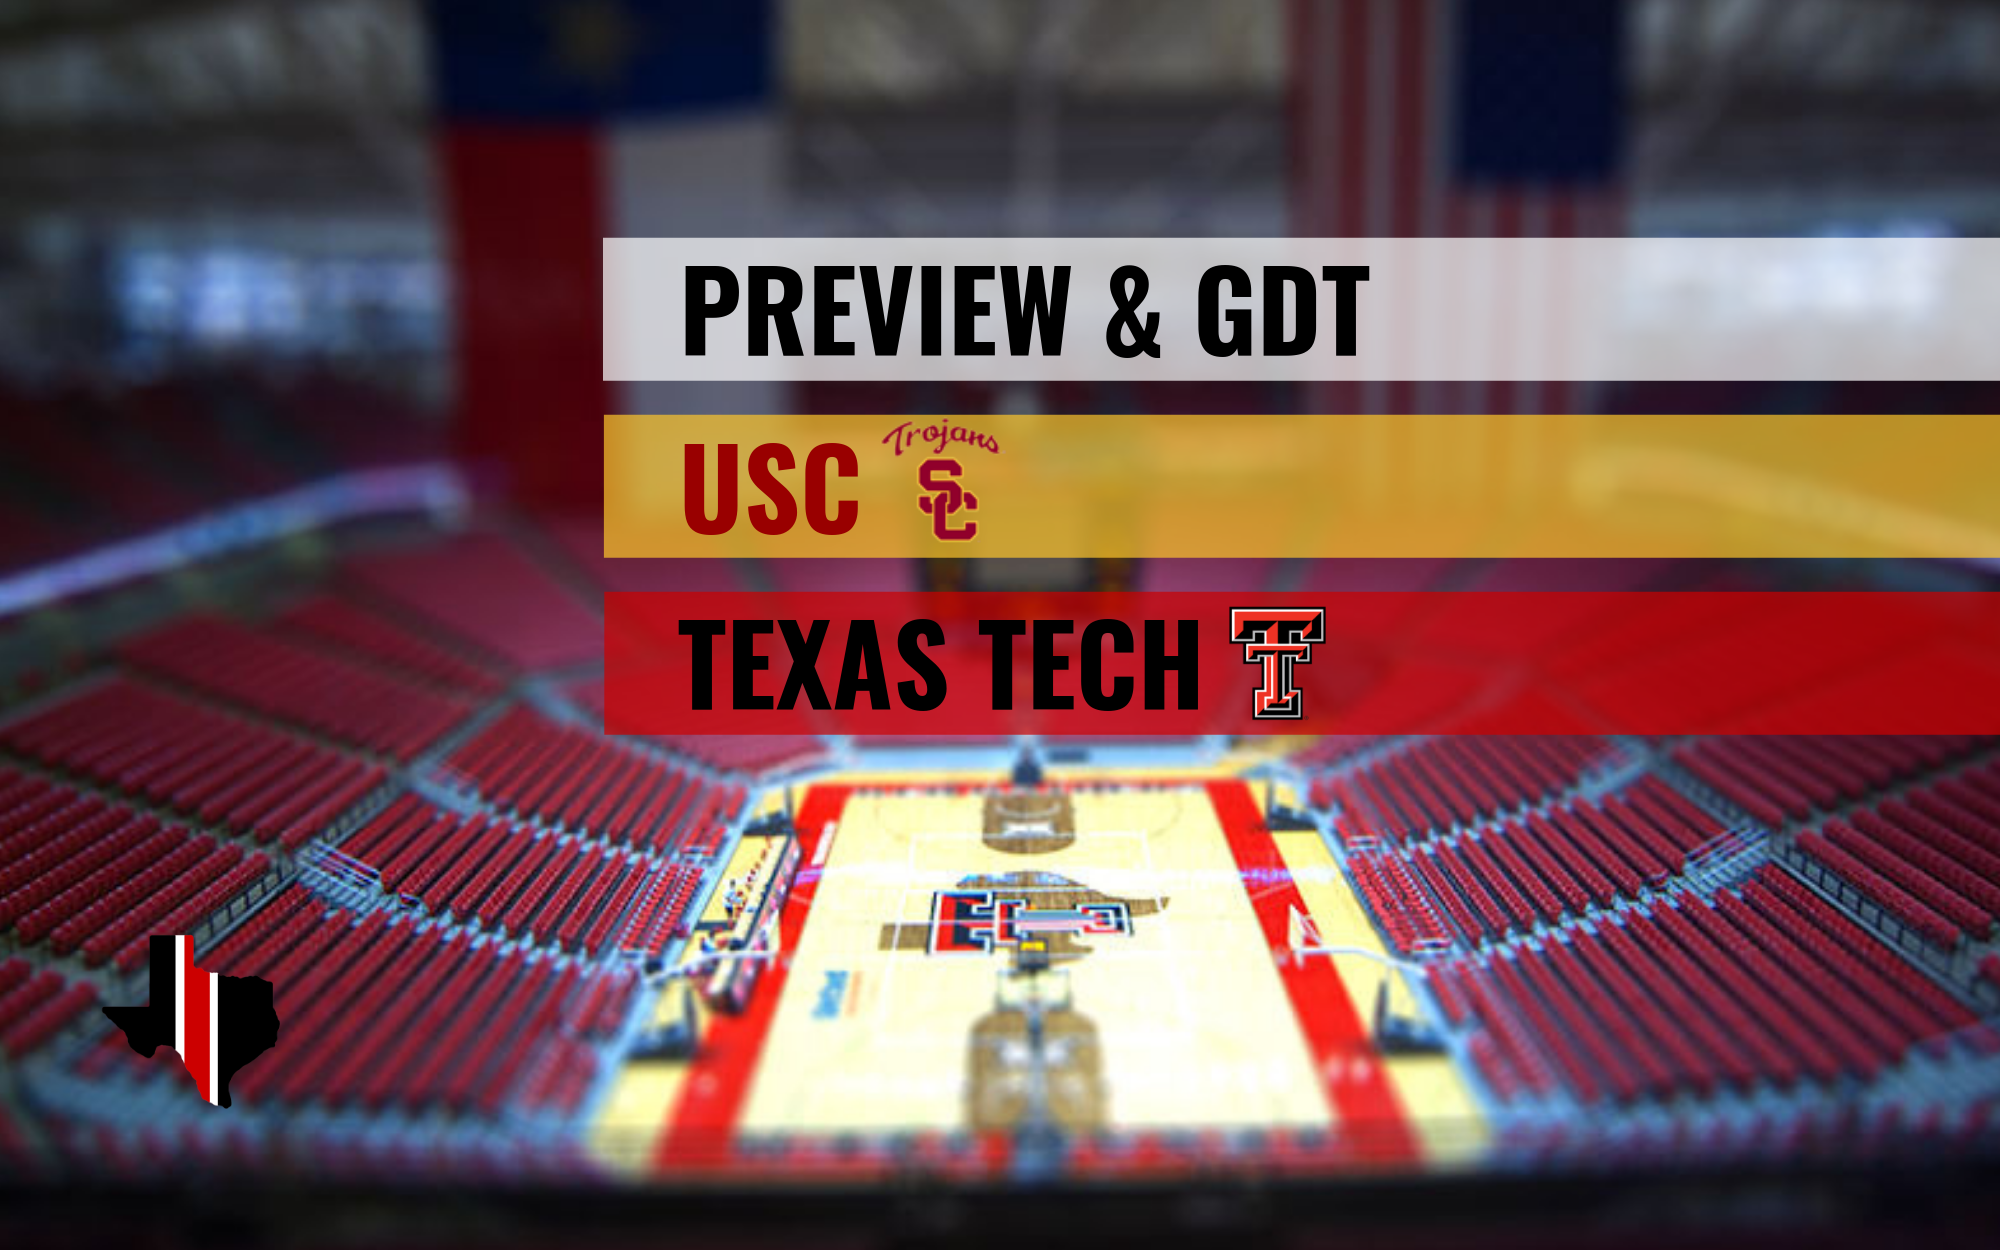 Preview & GDT | USC vs. Texas Tech